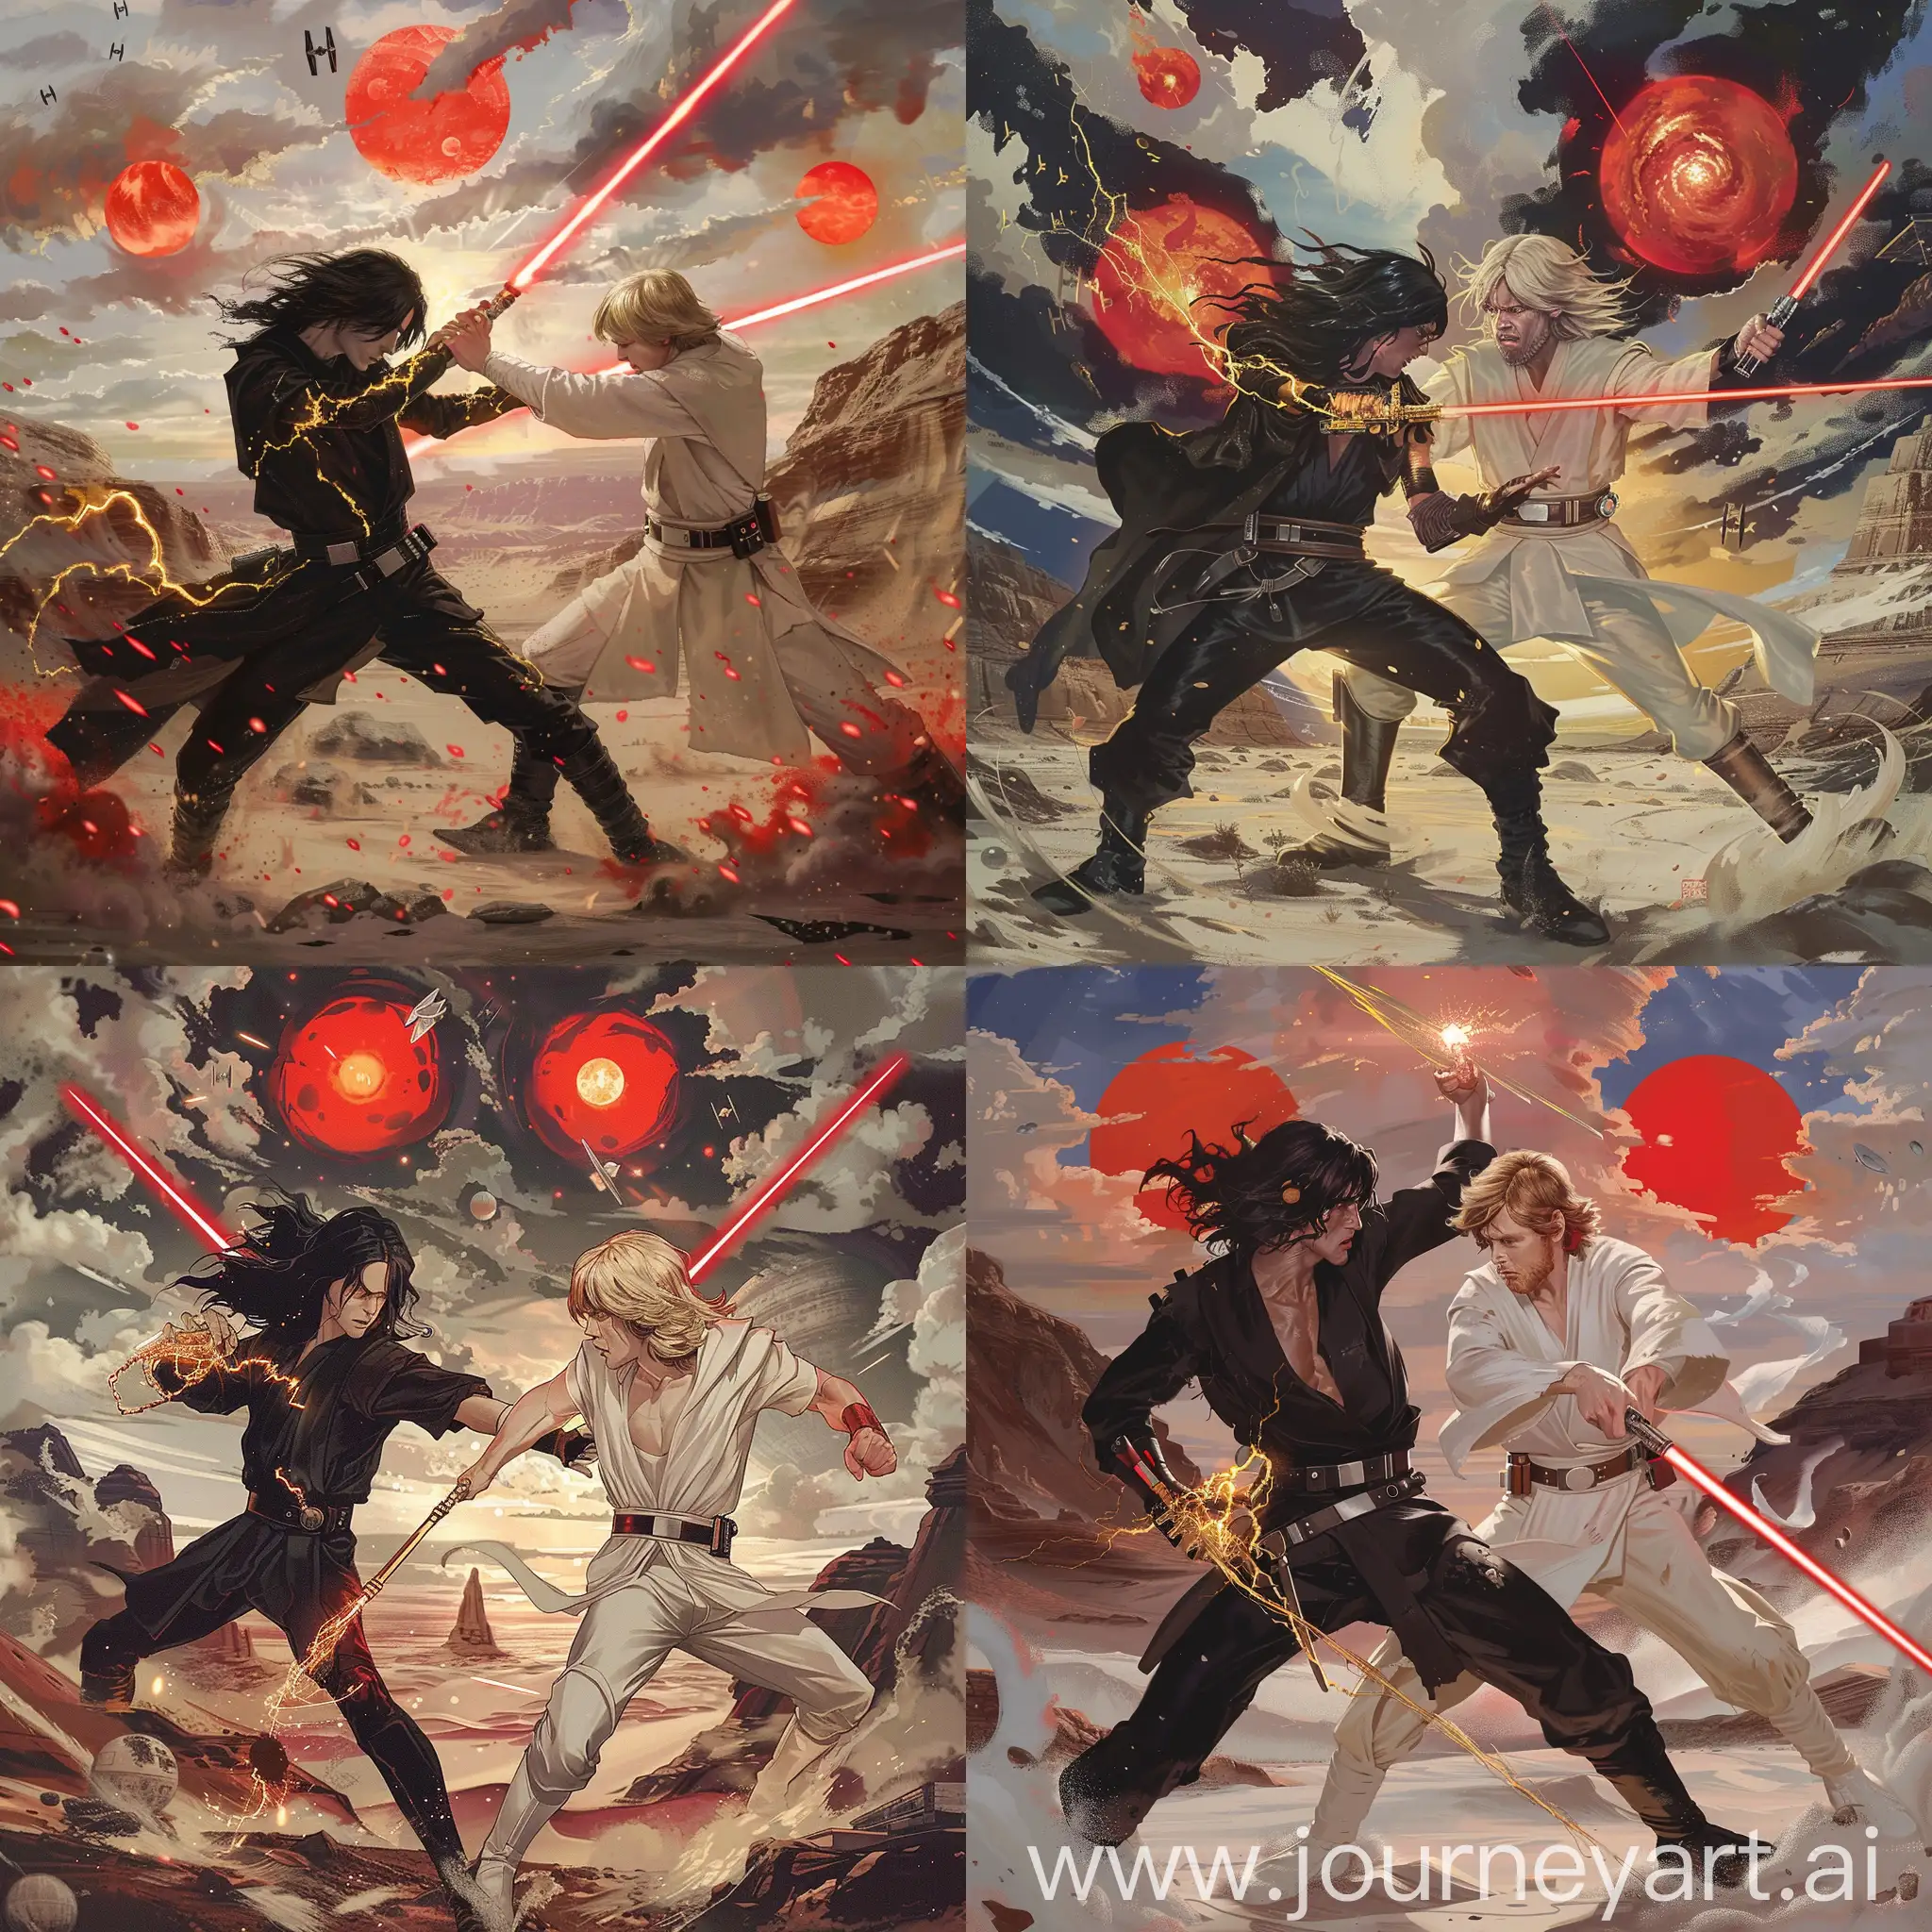 Dueling-Heroes-Paul-Atrides-with-Golden-Electric-Blade-vs-Luke-Skywalker-with-Red-Laser-Sword-on-Desert-Planet